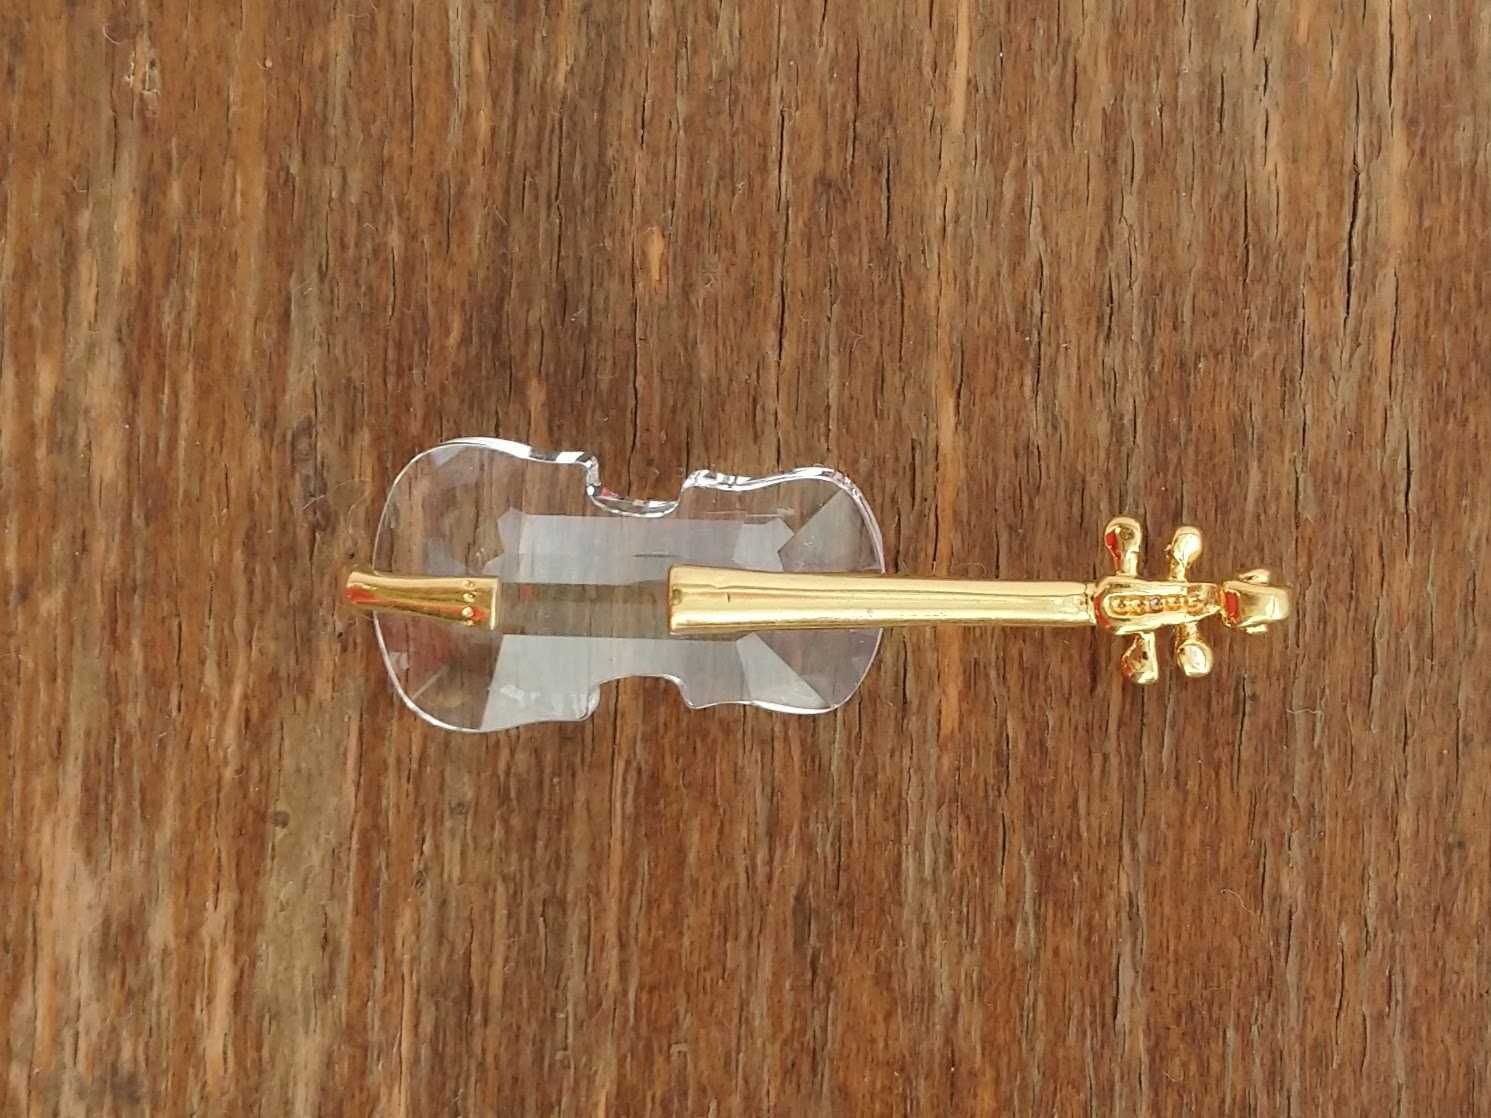 Miniatura Swarovski in forma de vioara